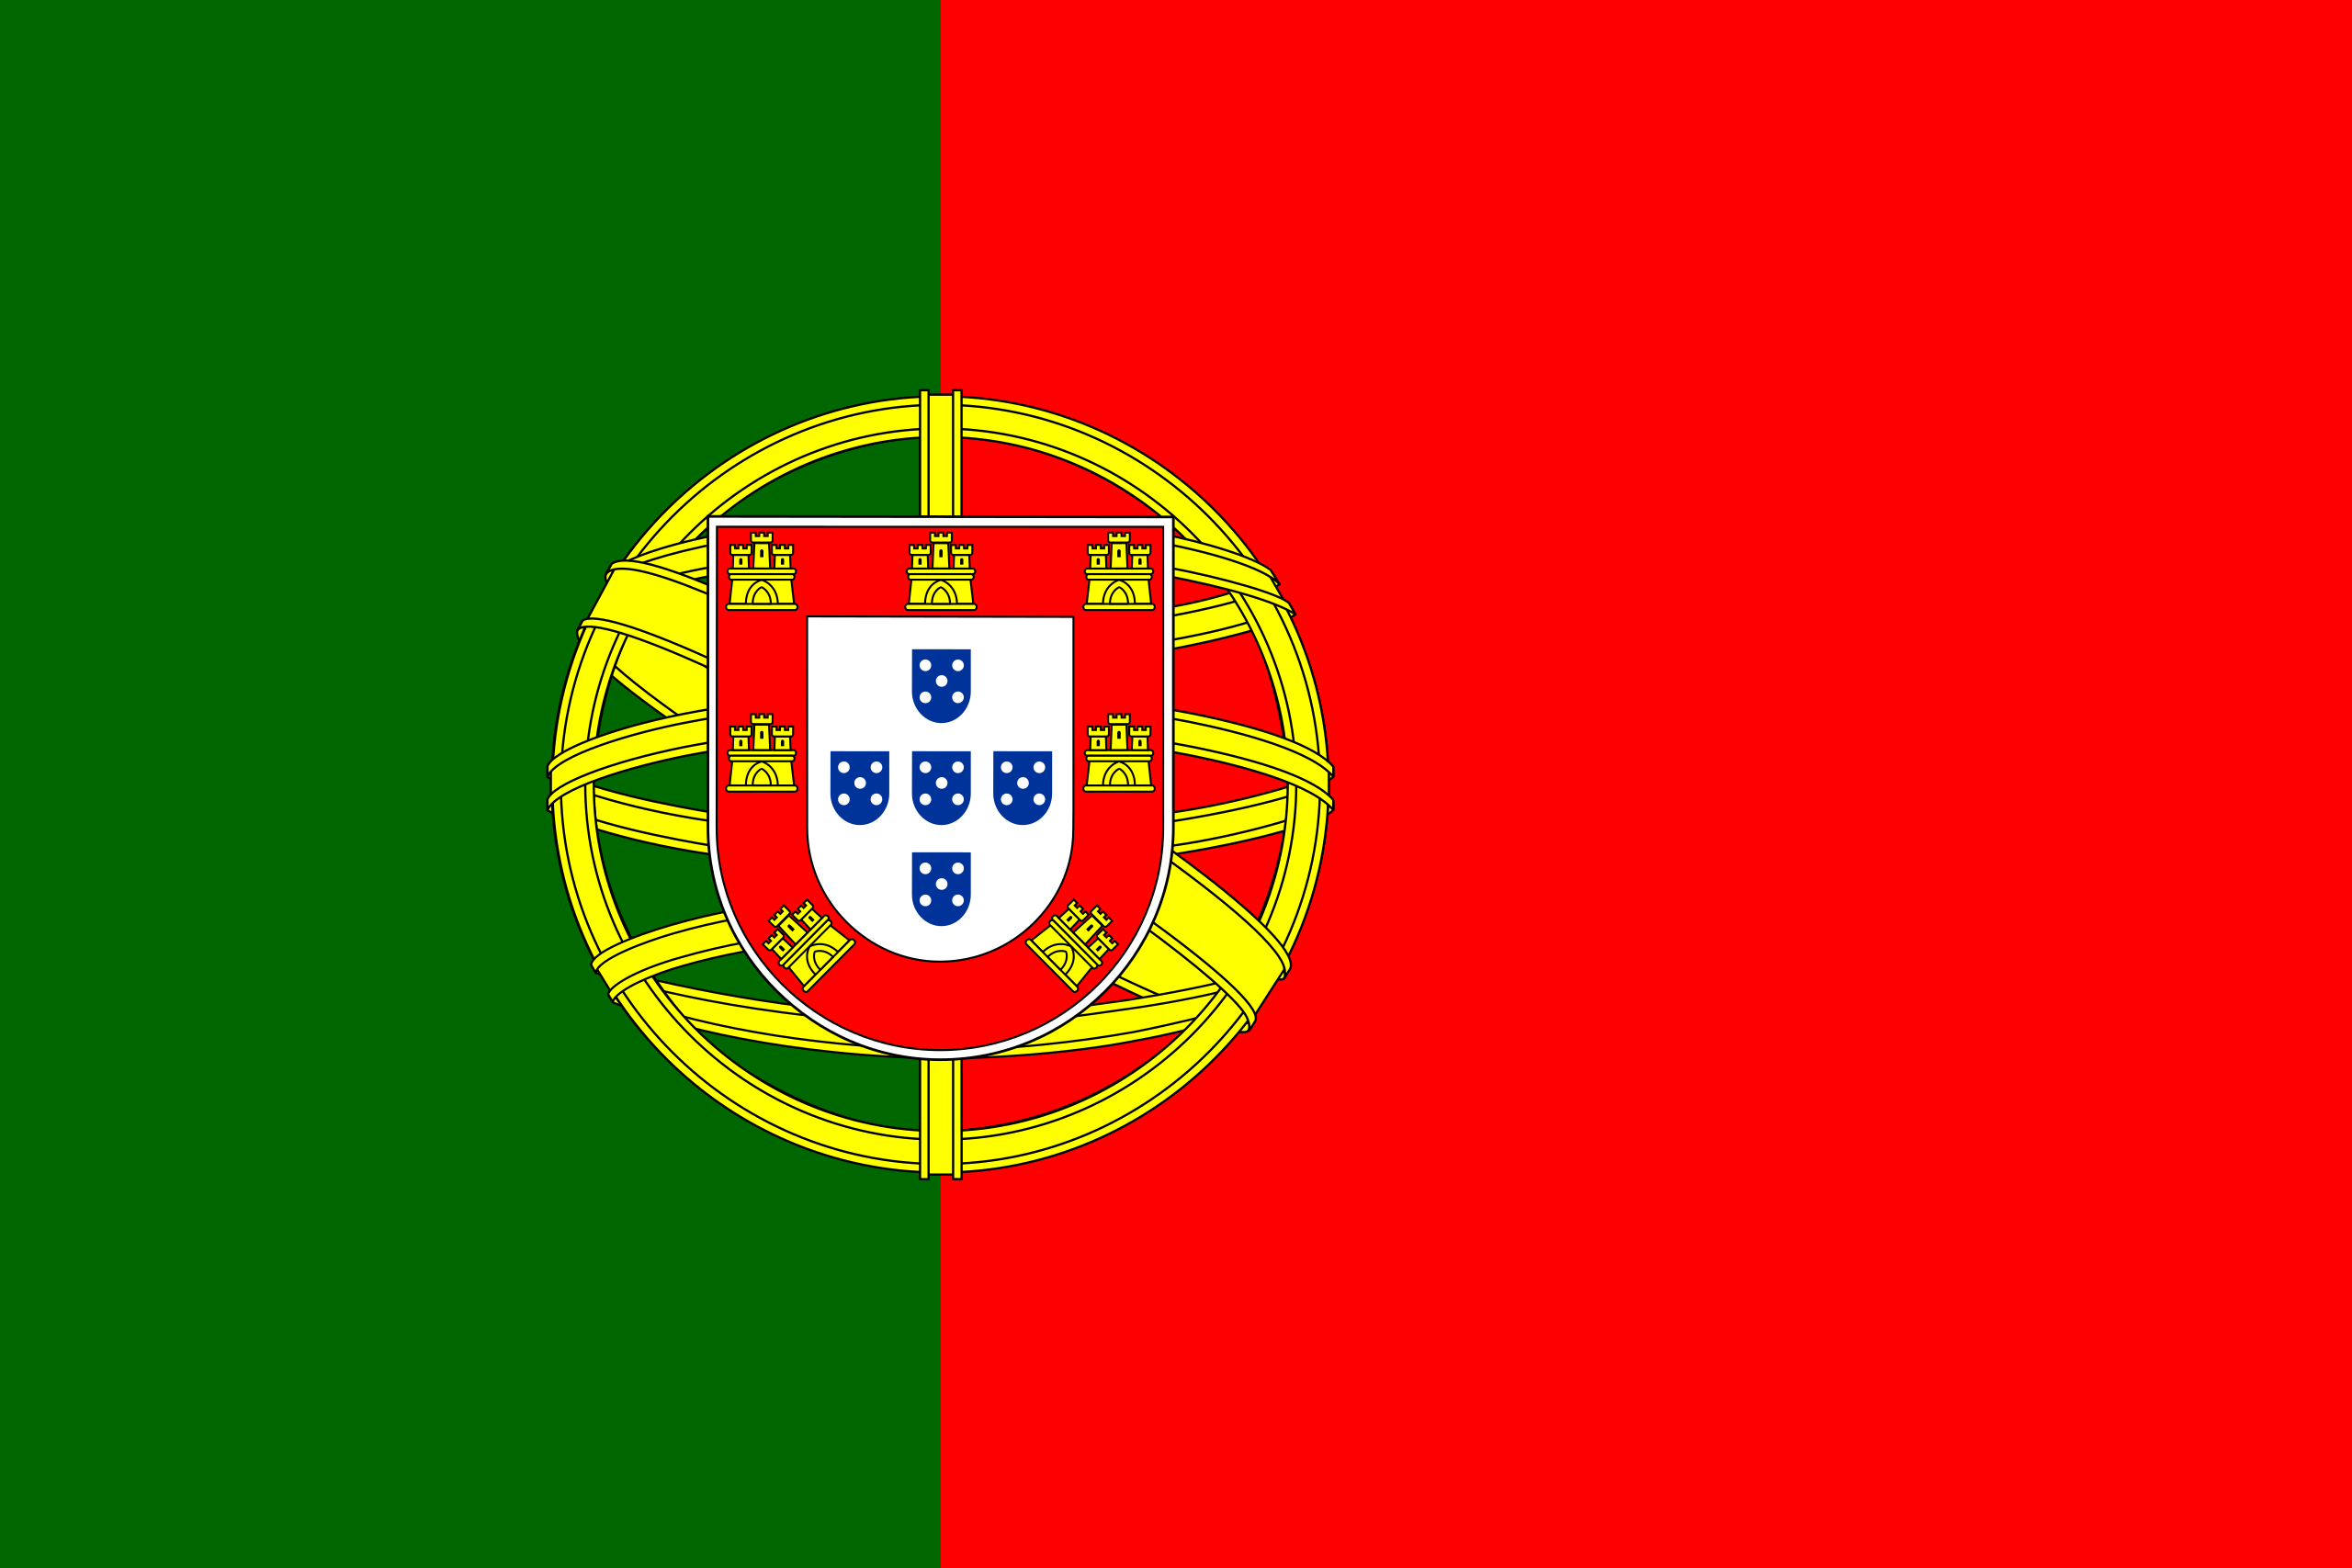 seo portugal